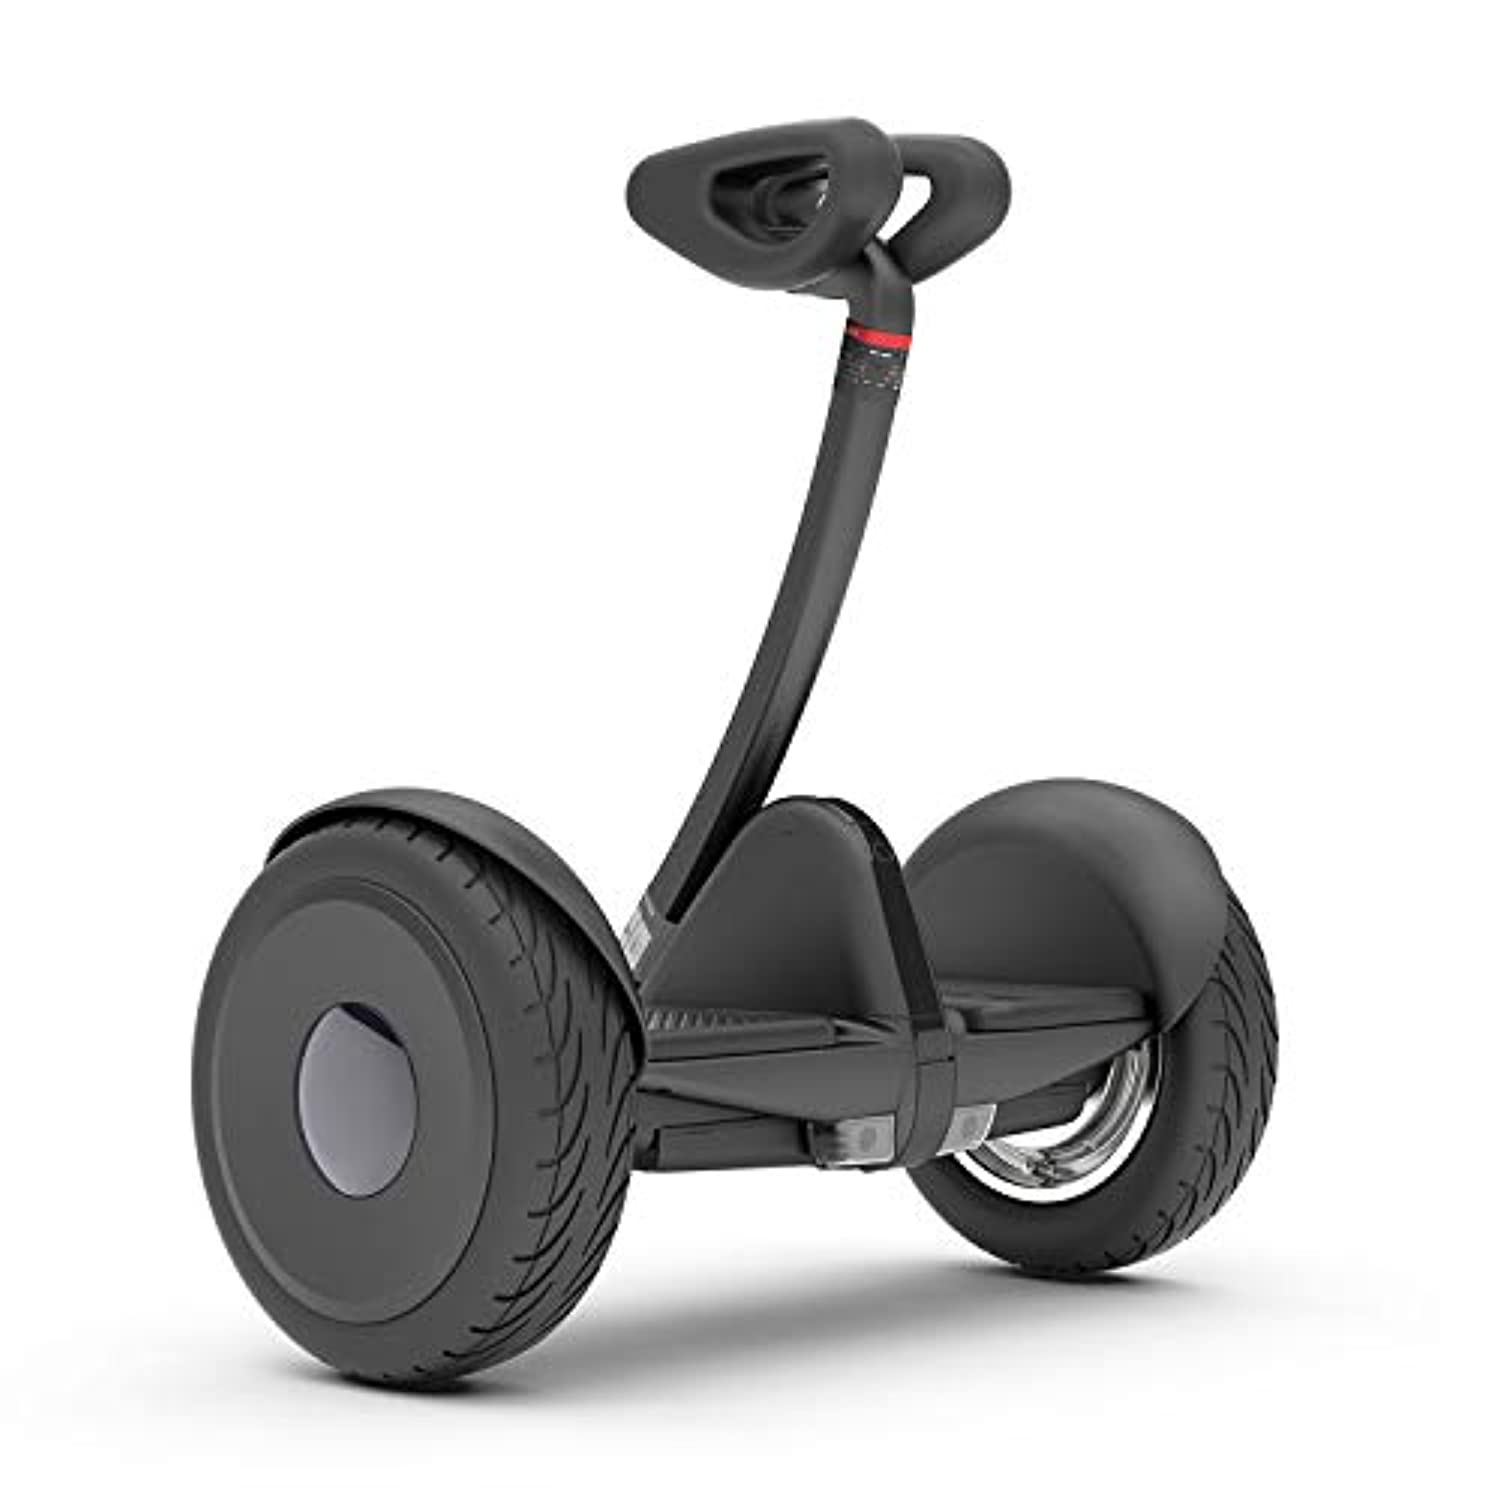 Segway Ninebot S Smart Self-Balancing Electric Transporter, Black